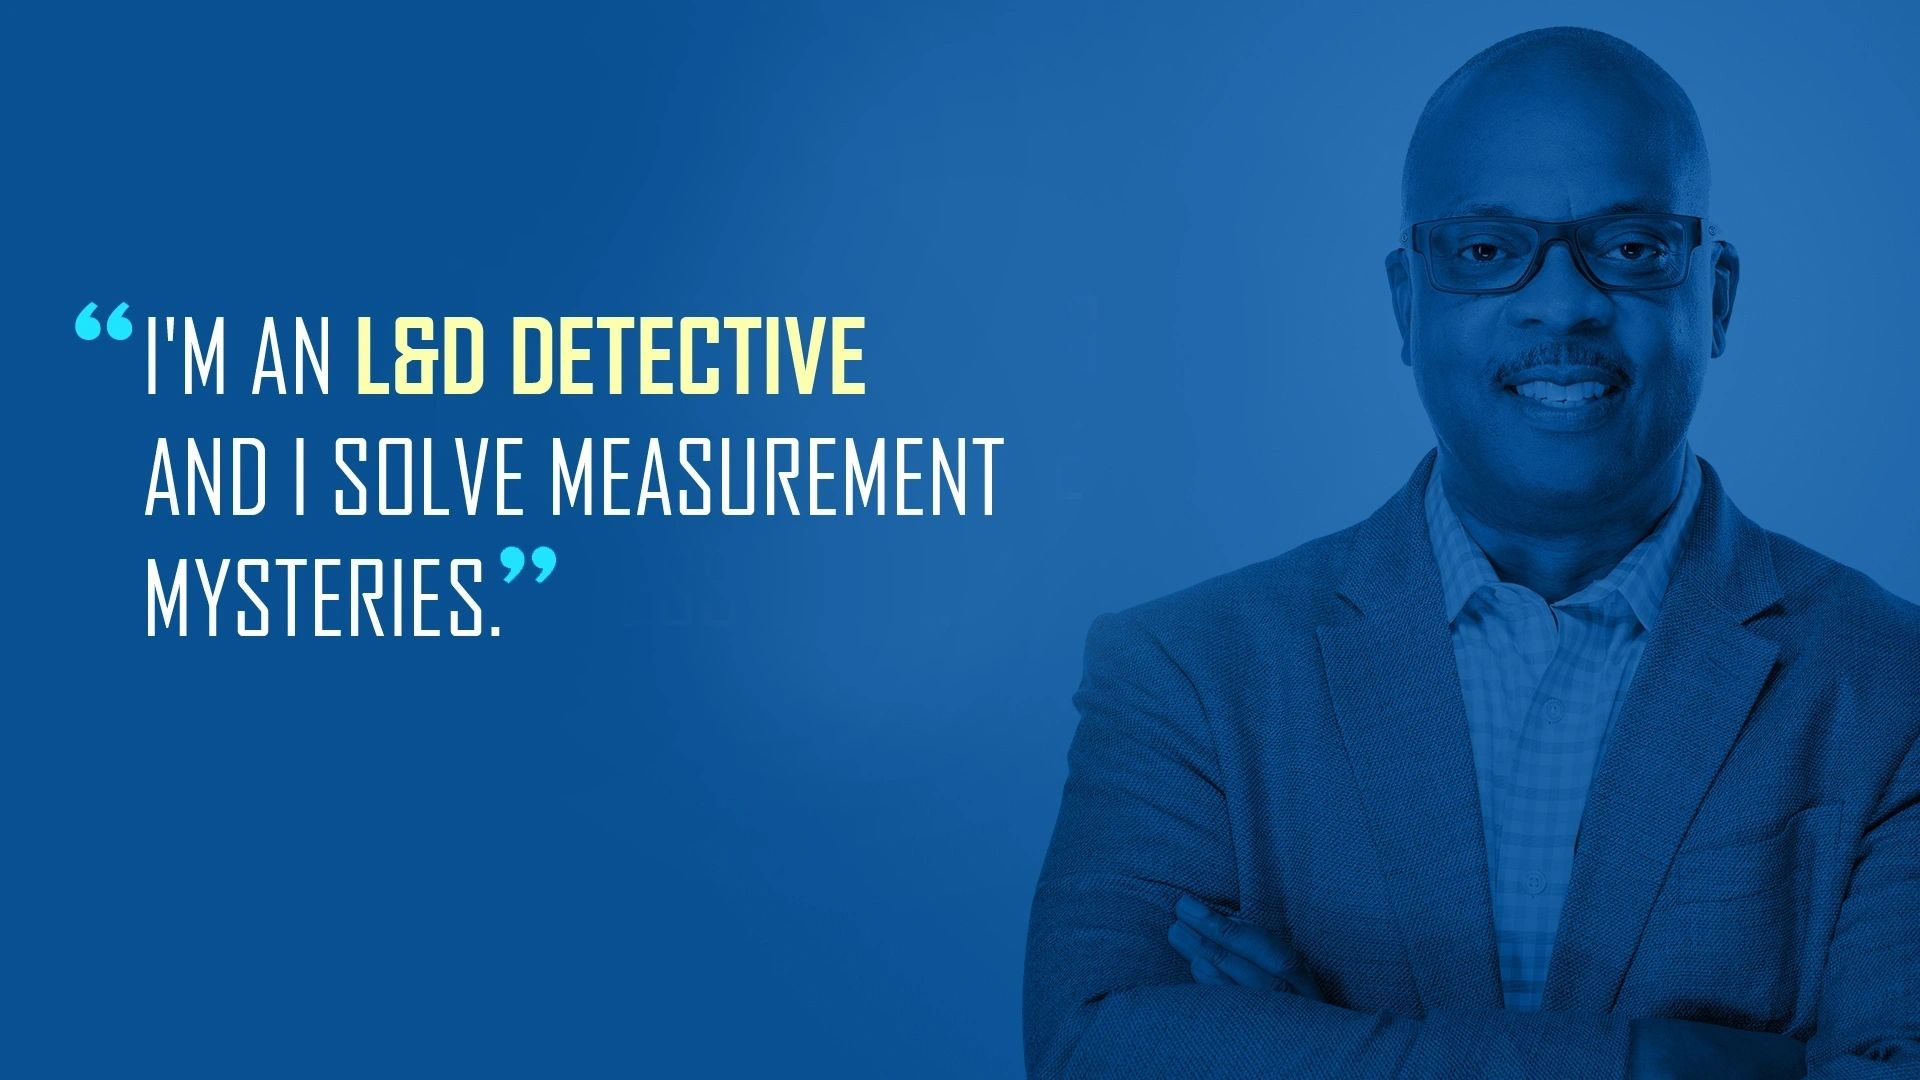 L&D Detective Kit for Solving Impact Mysteries